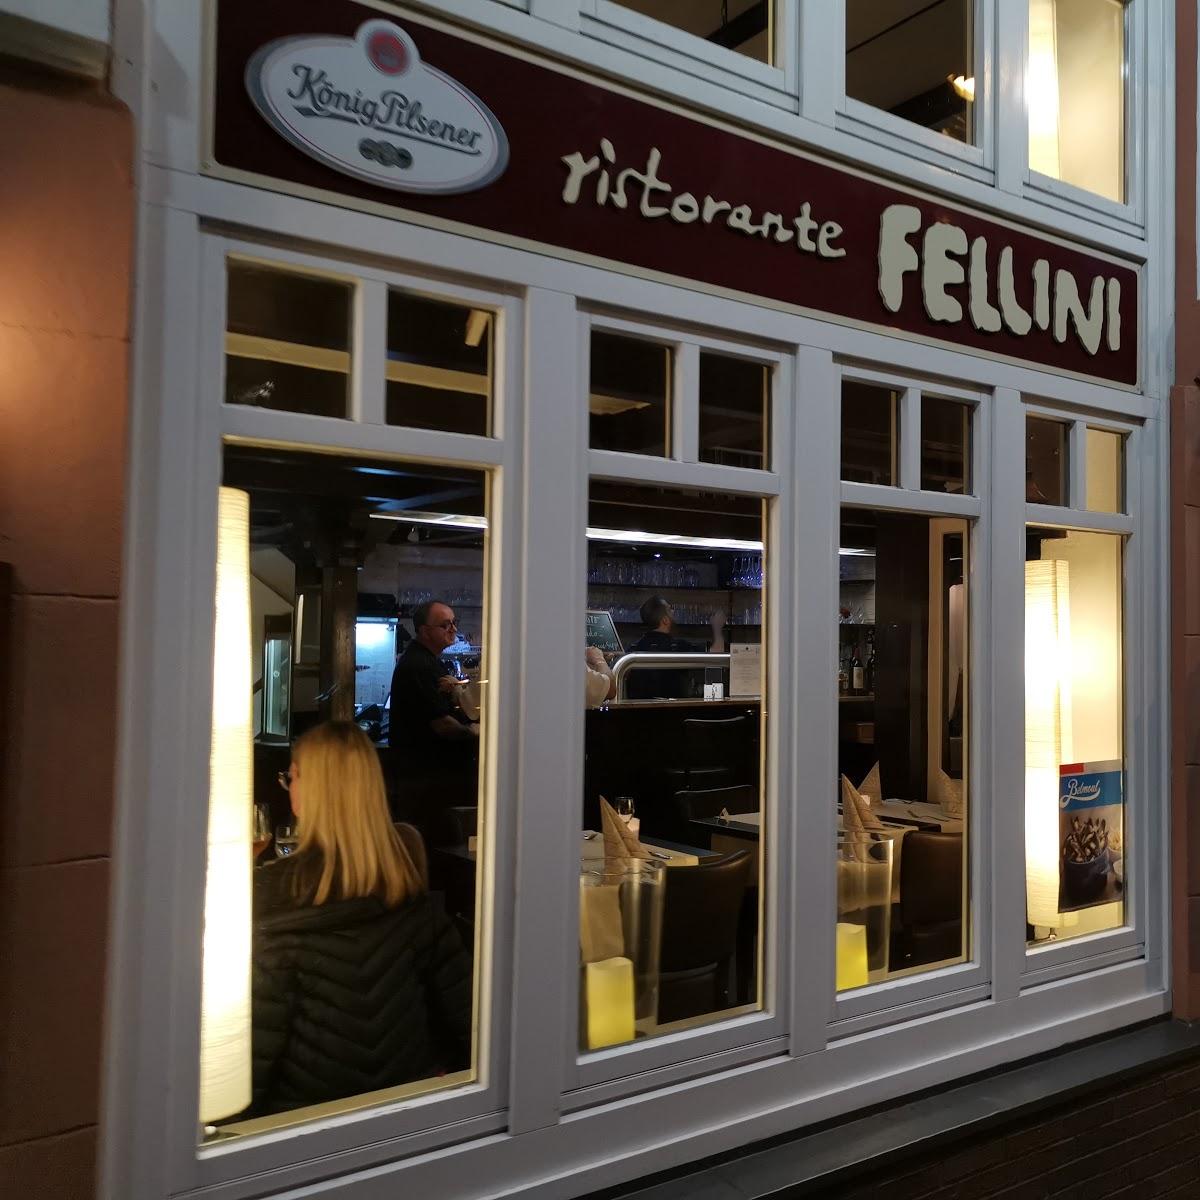 Restaurant "Fellini" in Hannover